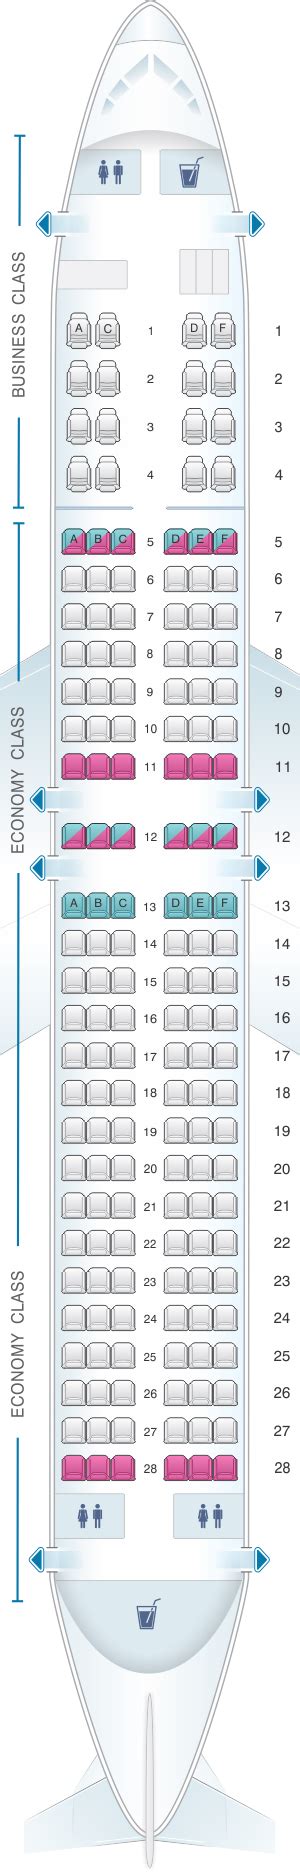 boeing 737-800 egyptair seat map